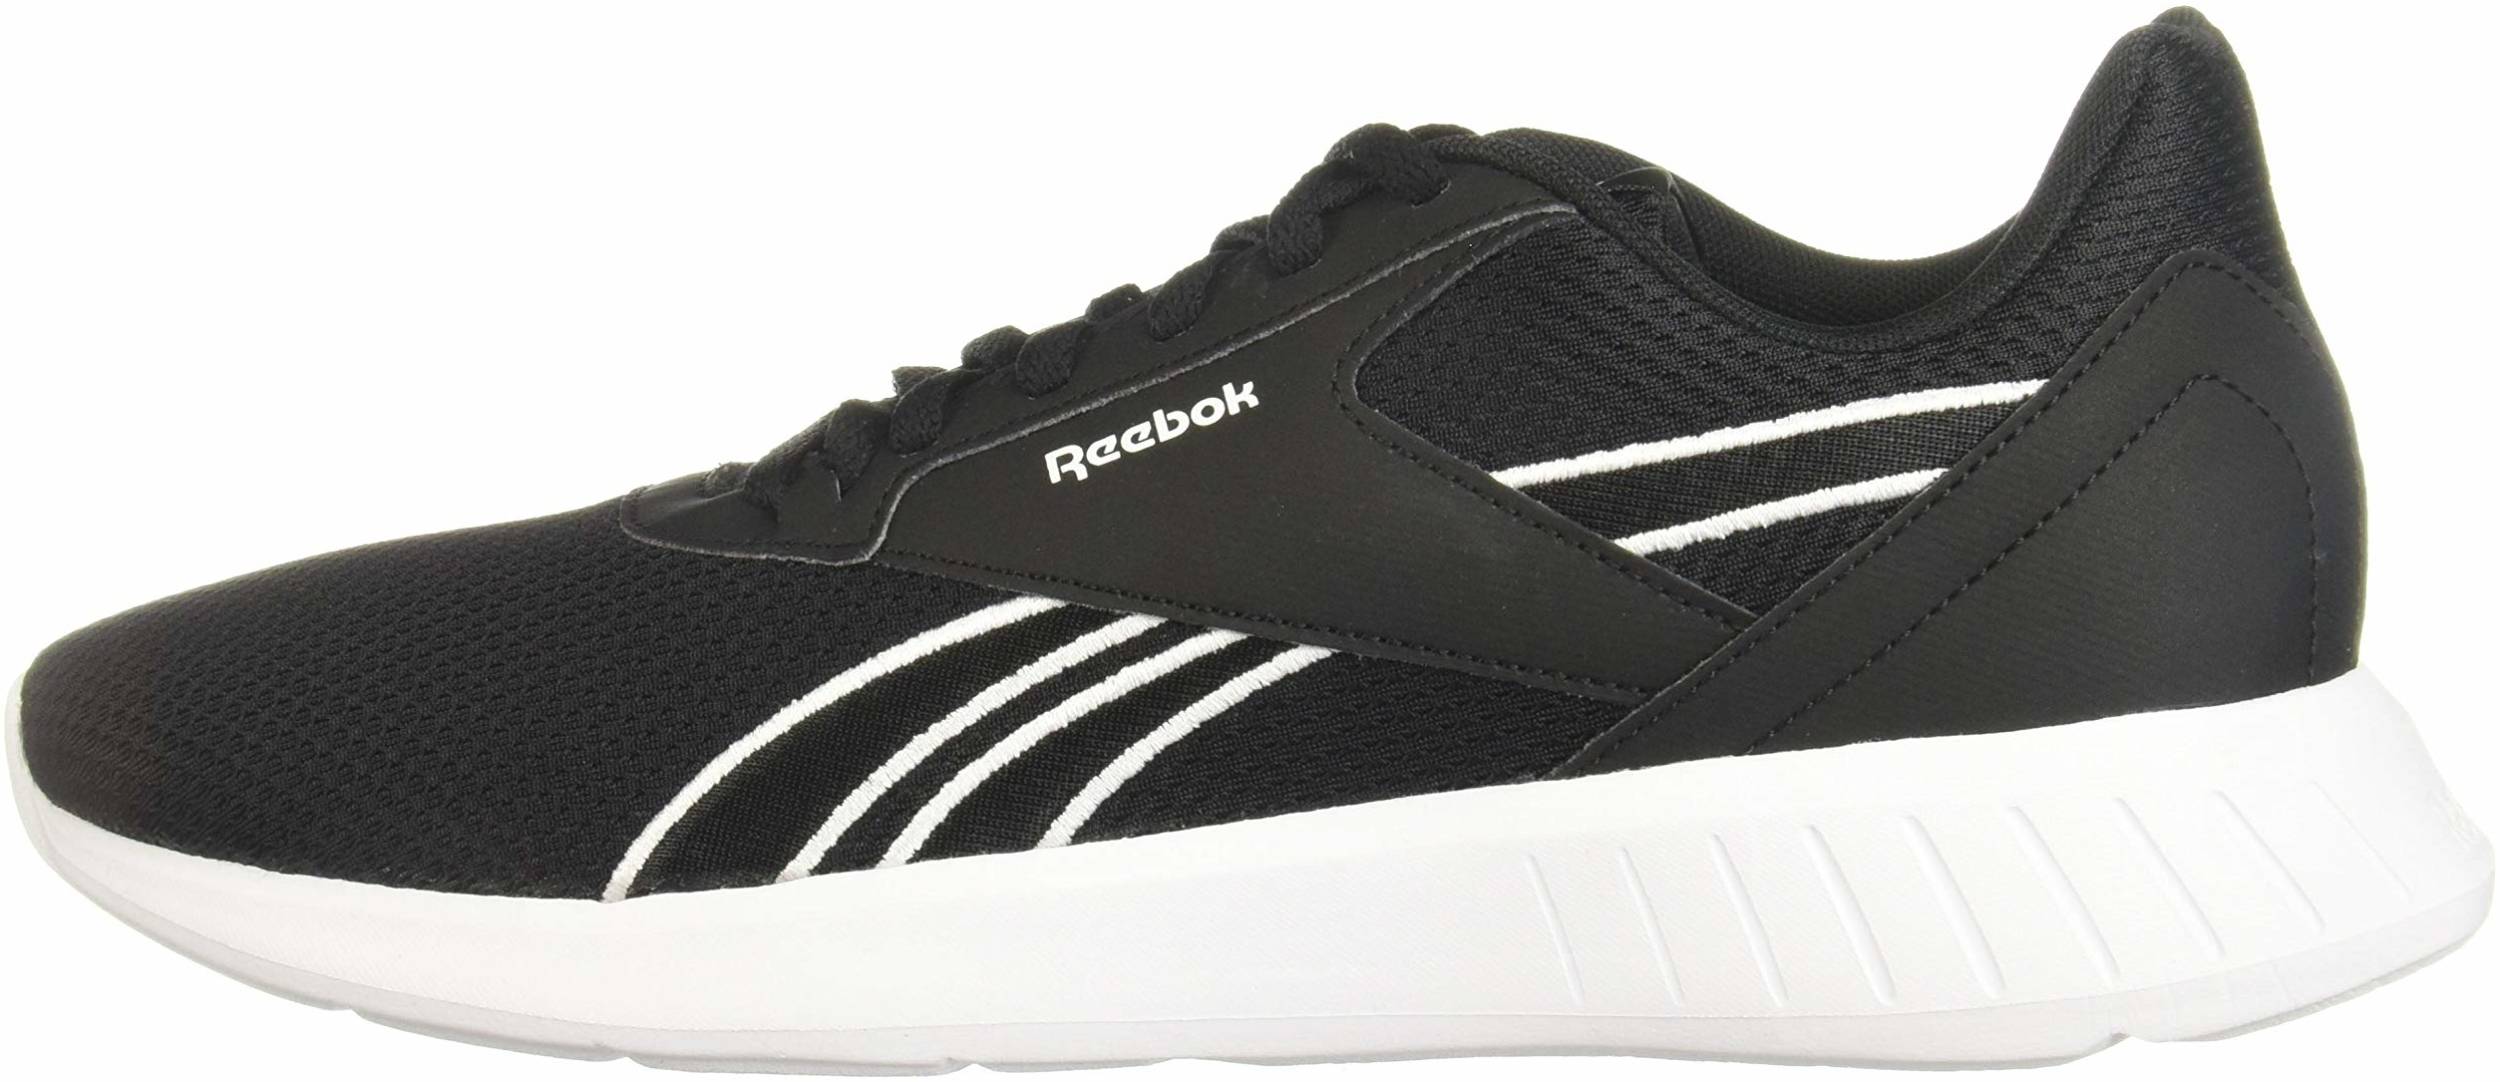 reebok shape up shoes reviews